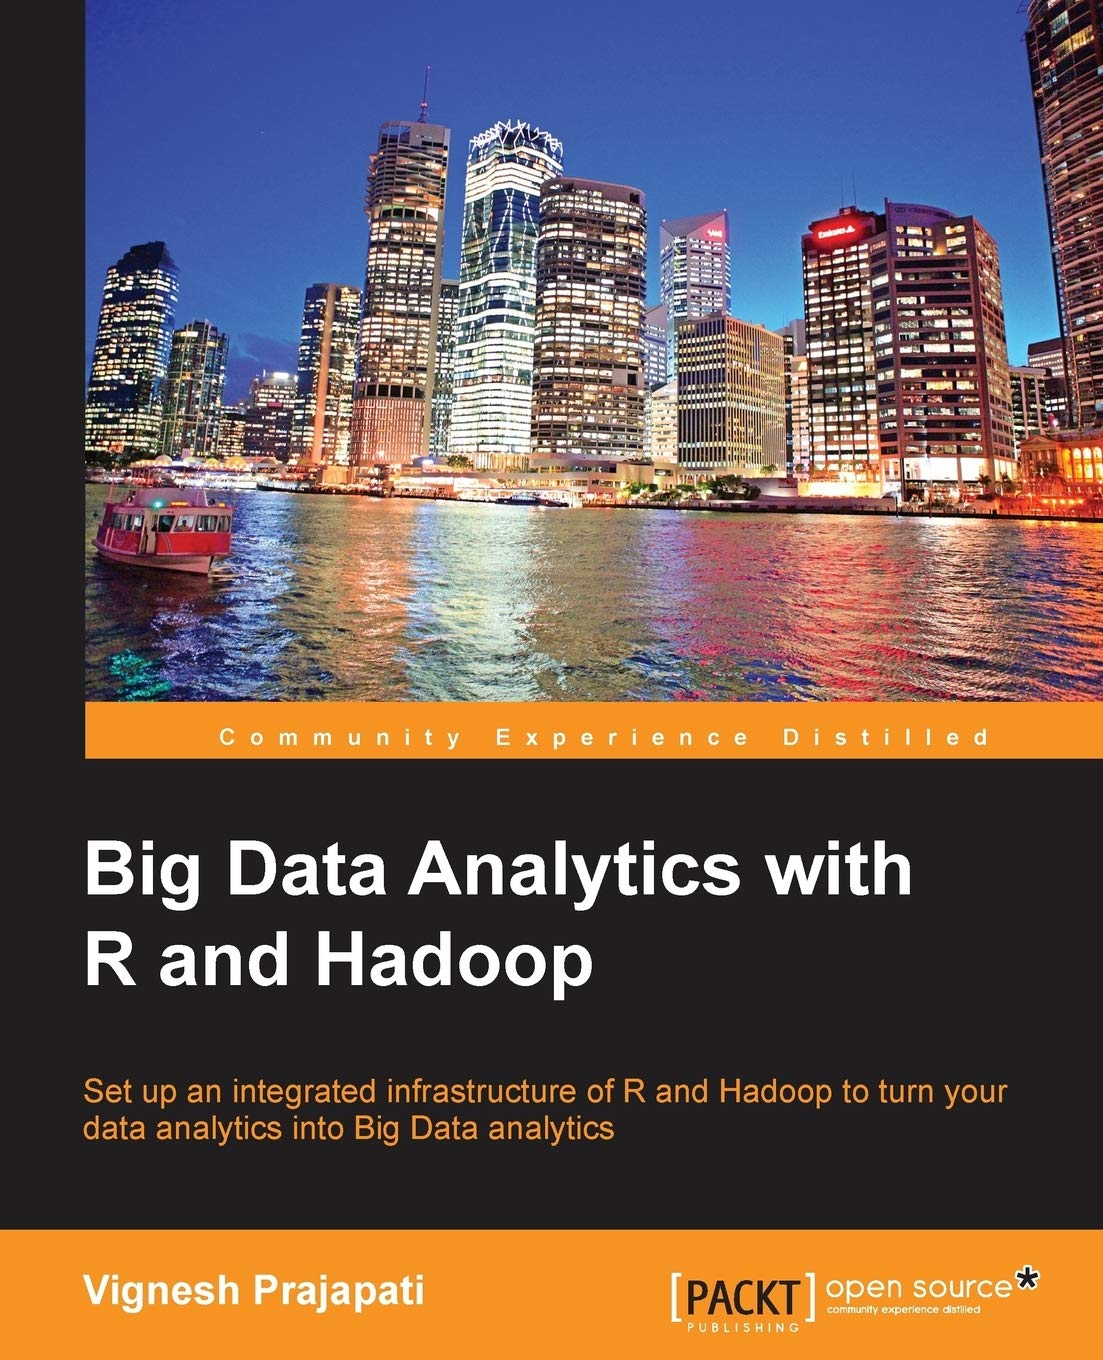 Big Data Analytics with R and Hadoop by Vignesh Prajapati